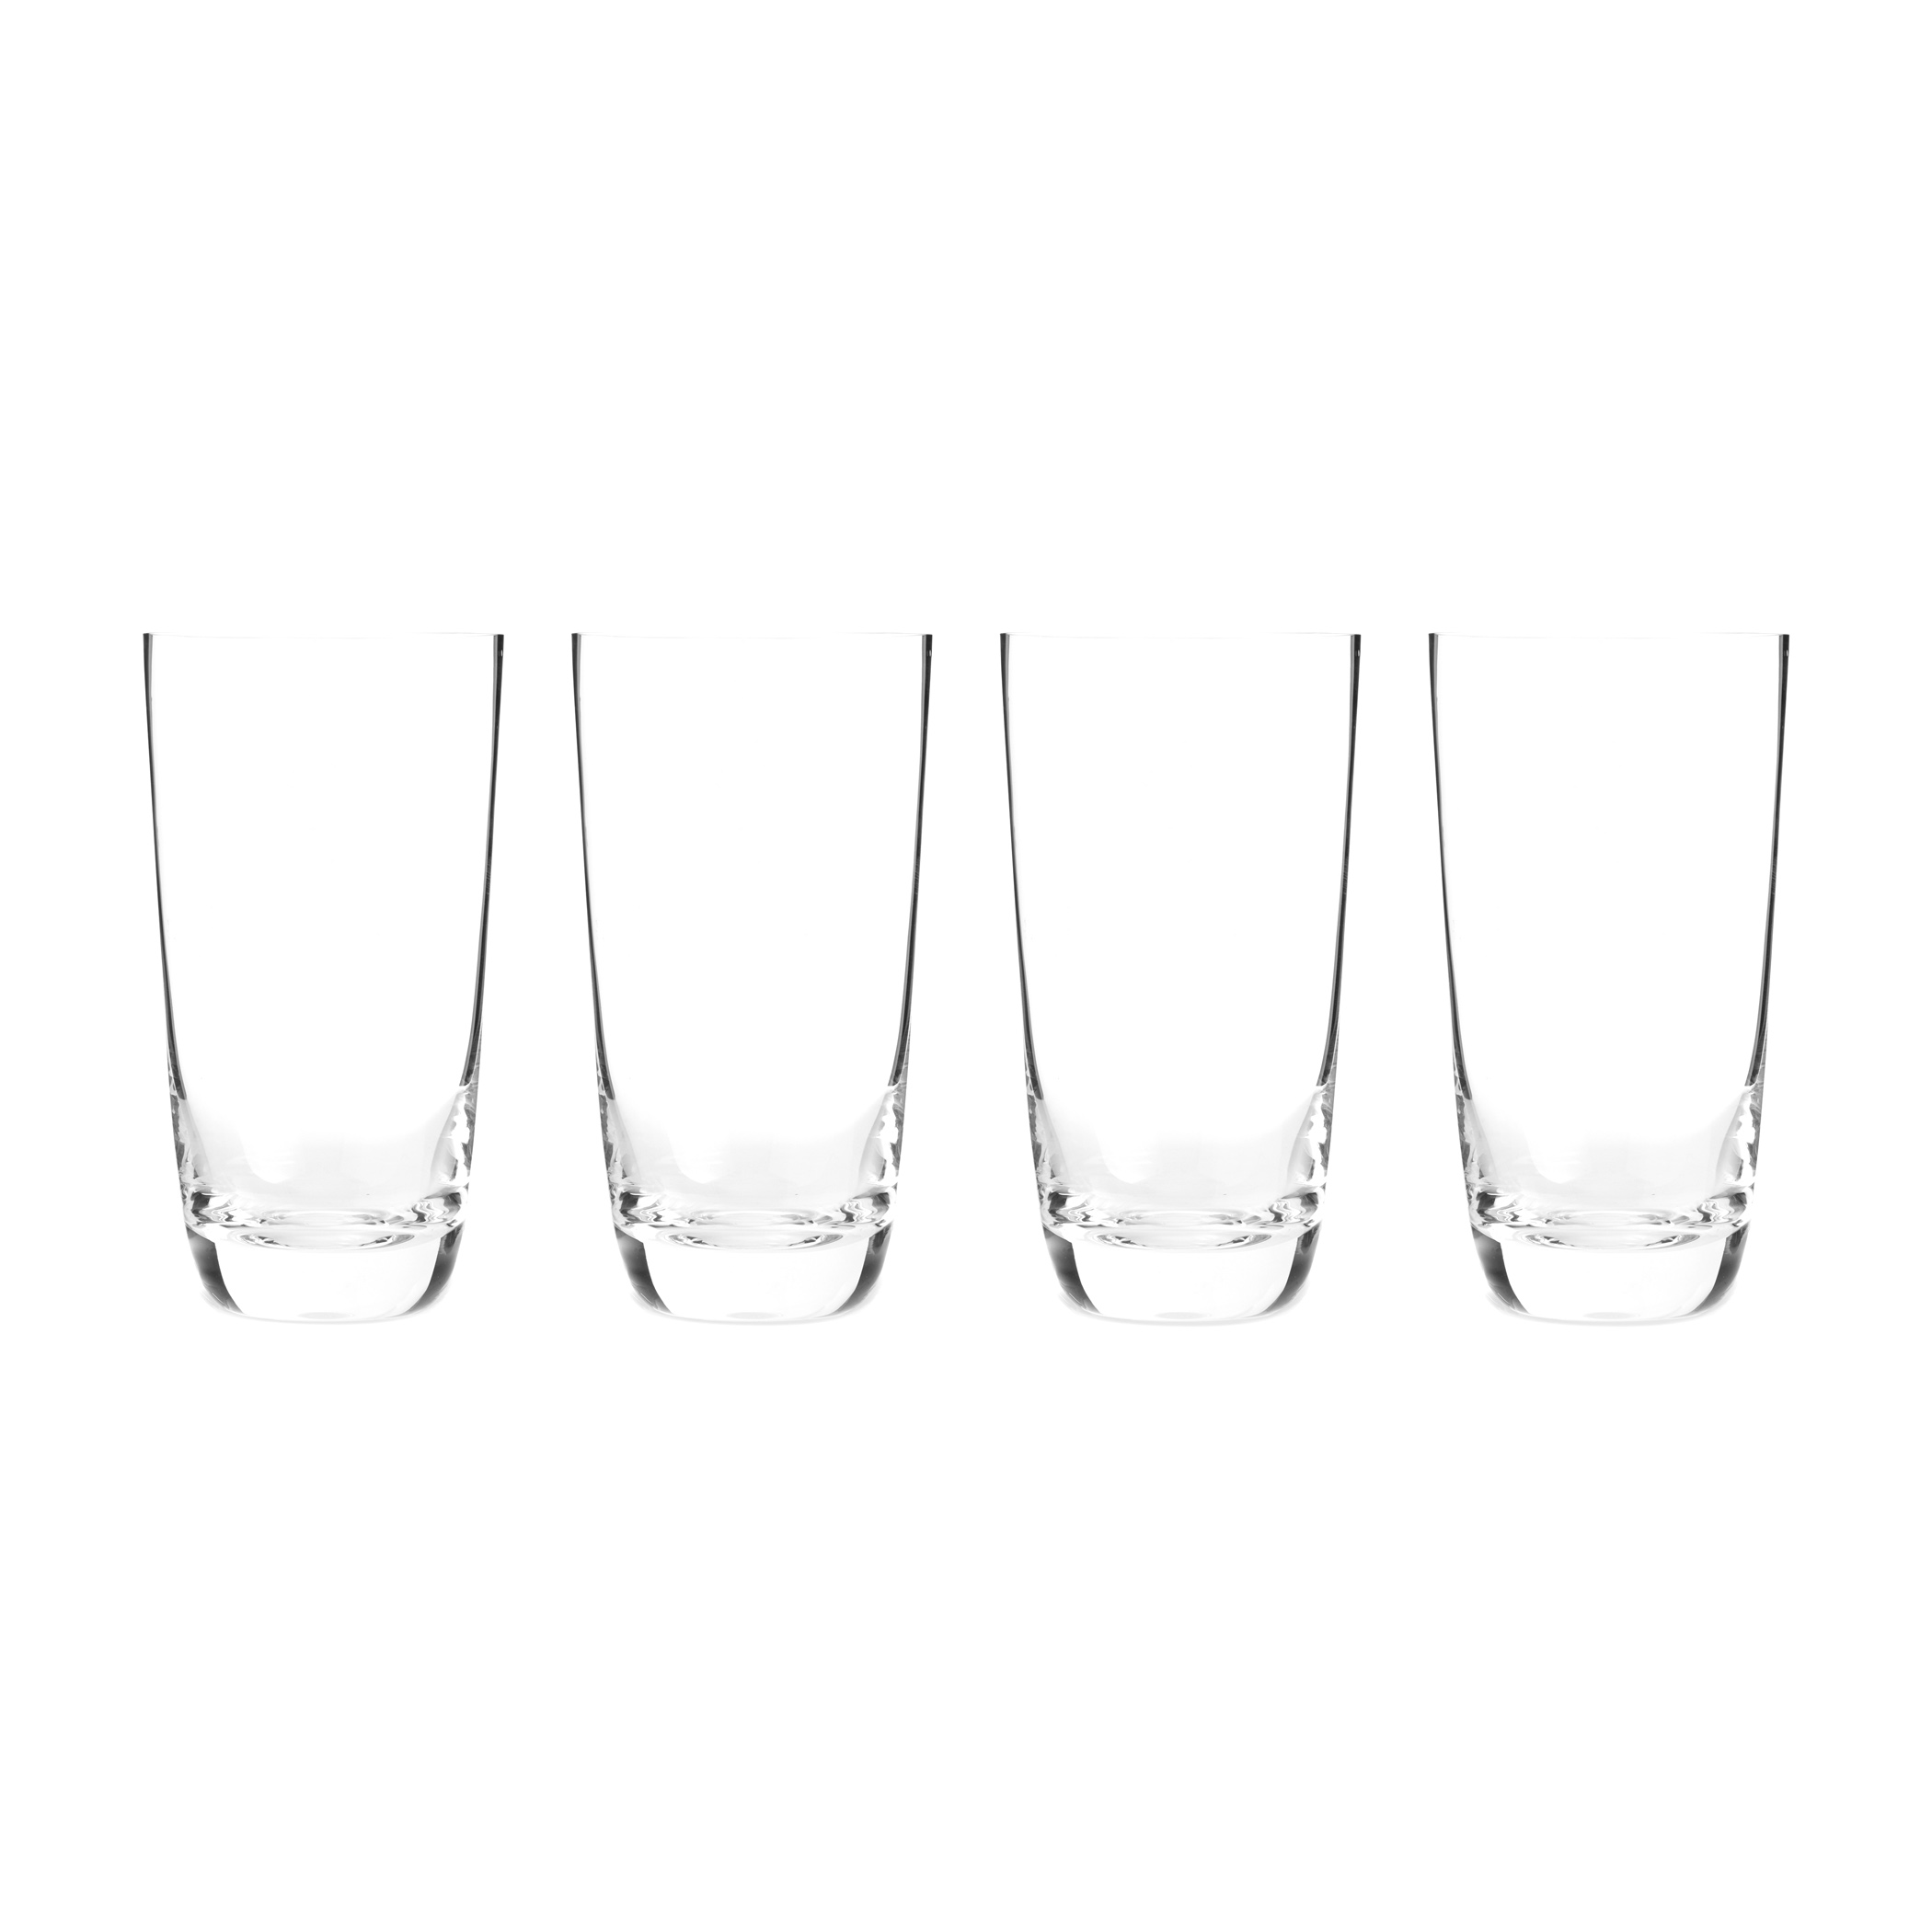 Taos Highball Glasses (Set of 4) Made of Glass